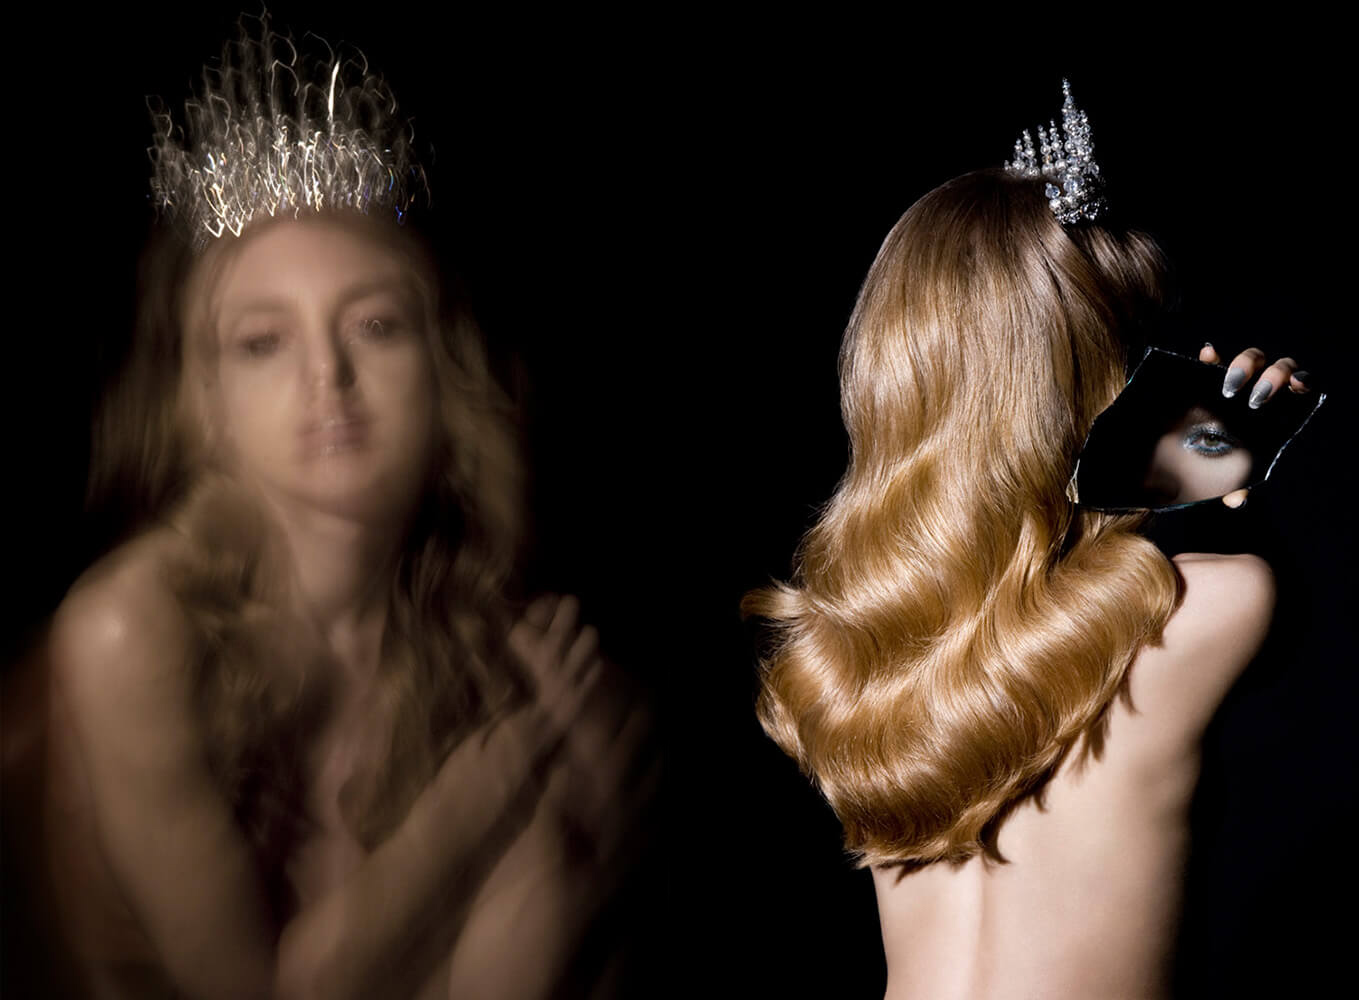 Angel-Ruiz-Ruiz-editorial-Beauty-mirror-mirror-Magazine-avenue-illustrated-queen-crown-hair-eye-1359x1000